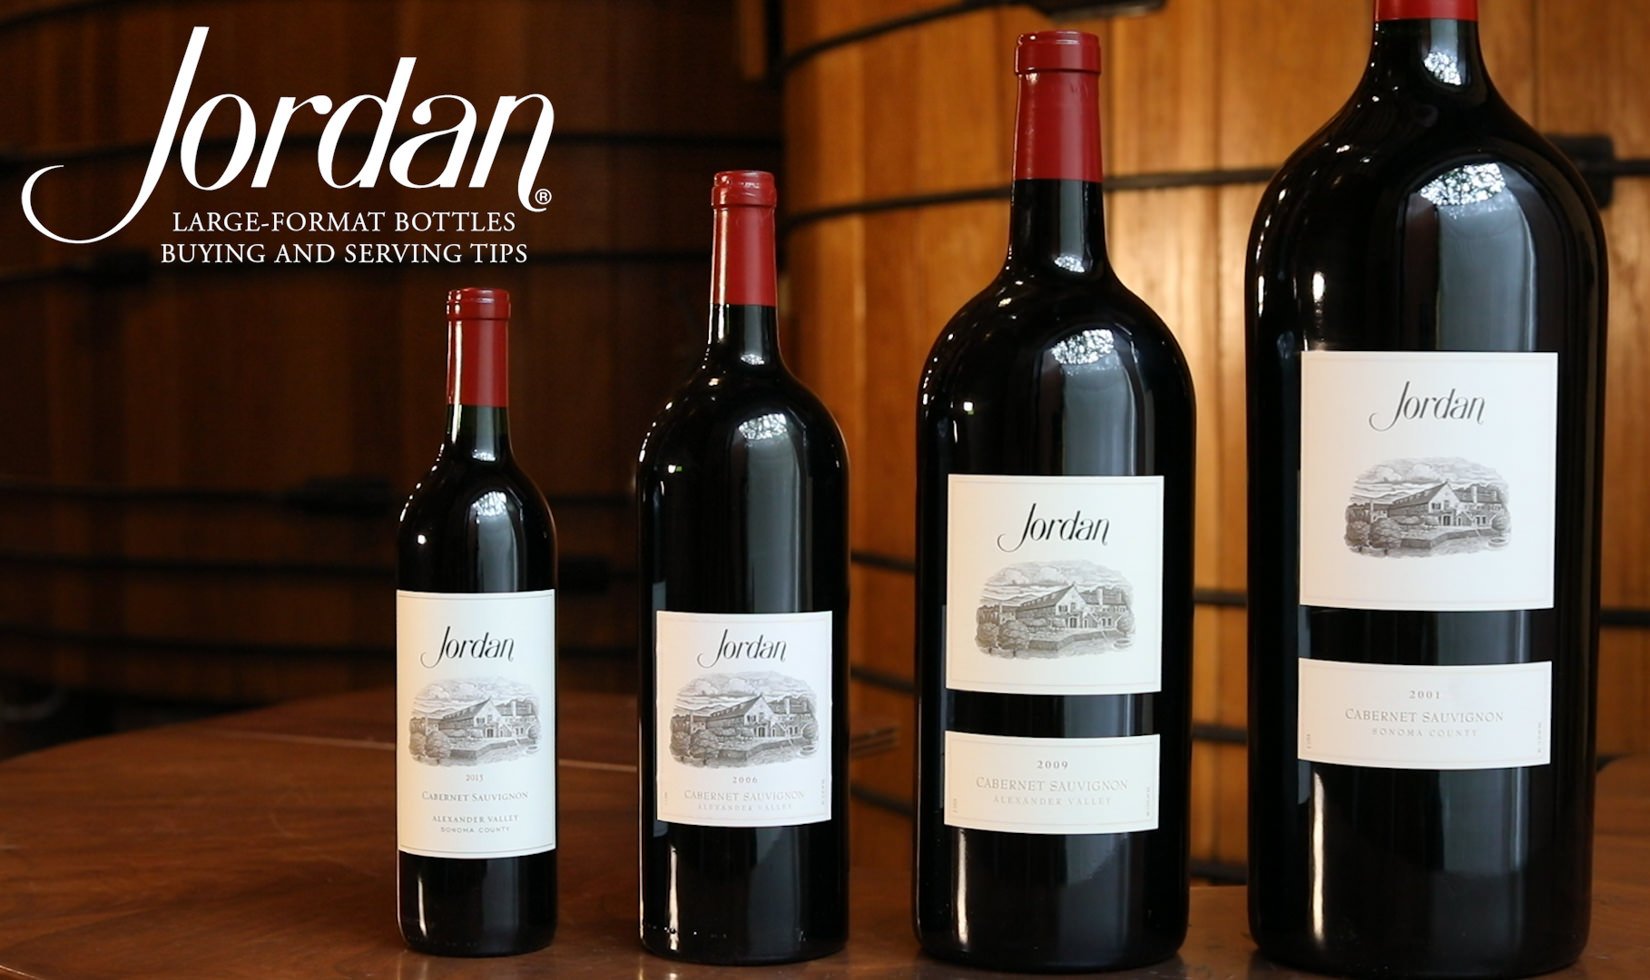 https://www.jordanwinery.com/wp-content/uploads/2017/05/2017-Jordan-Winery-Large-Format-Wine-Big-Bottle-Sizes-Serving-Buying-Storing-Guide-Party-Planner-Quantity-Video-Still-BLOG-SIZE-15.jpg